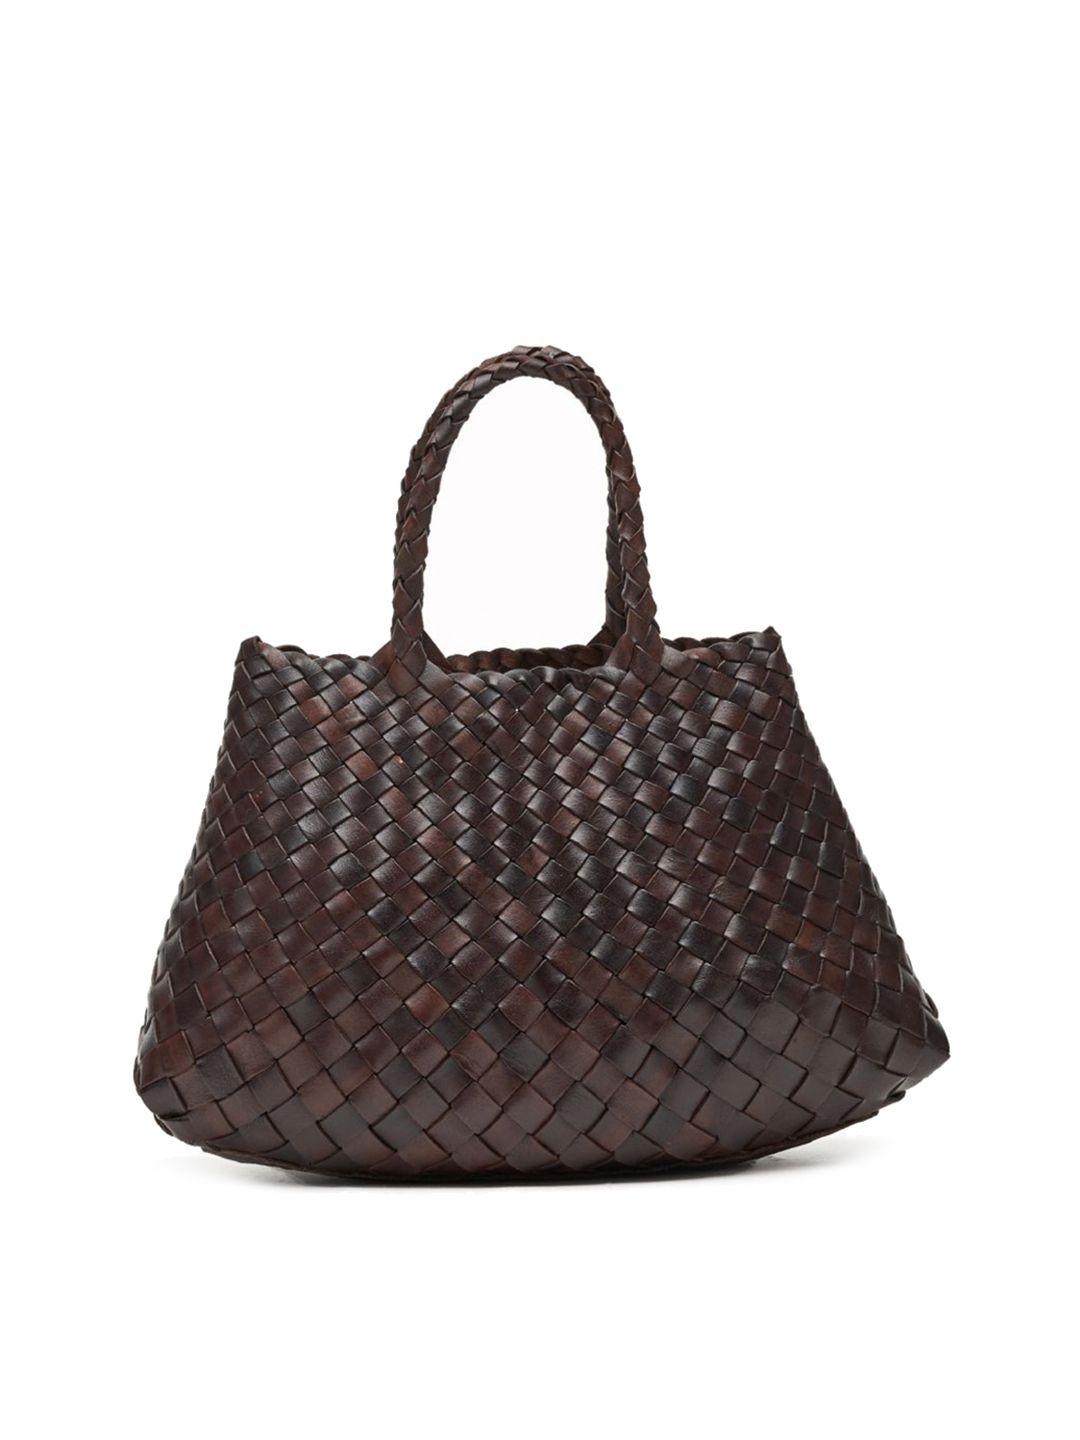 mistry textured leather shopper handheld bag